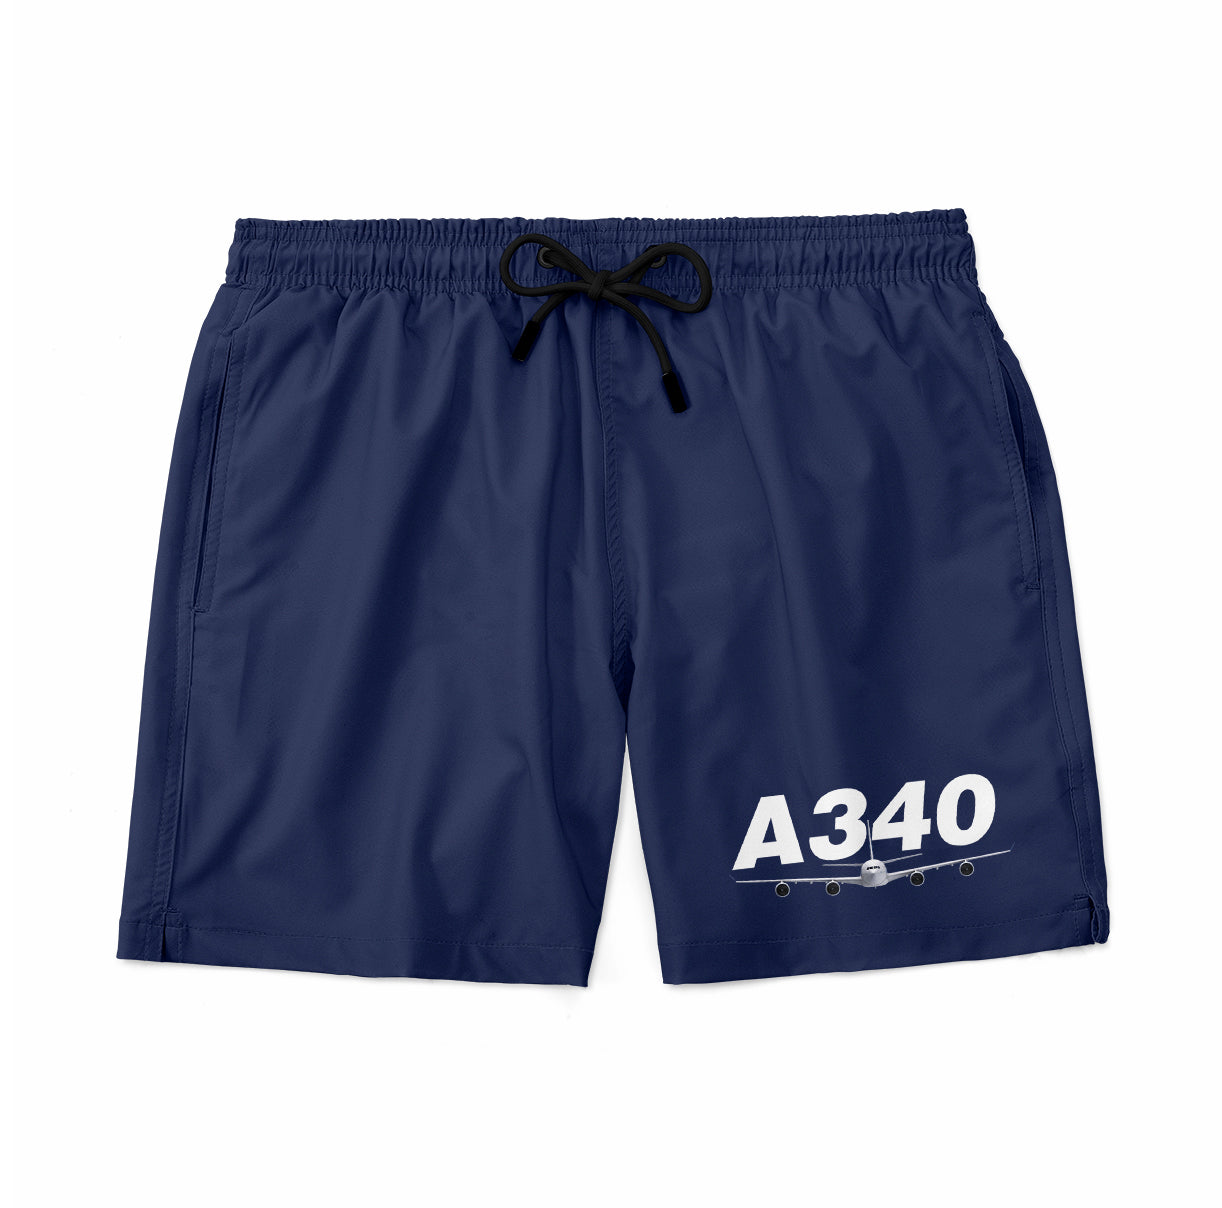 Super Airbus A340 Designed Swim Trunks & Shorts